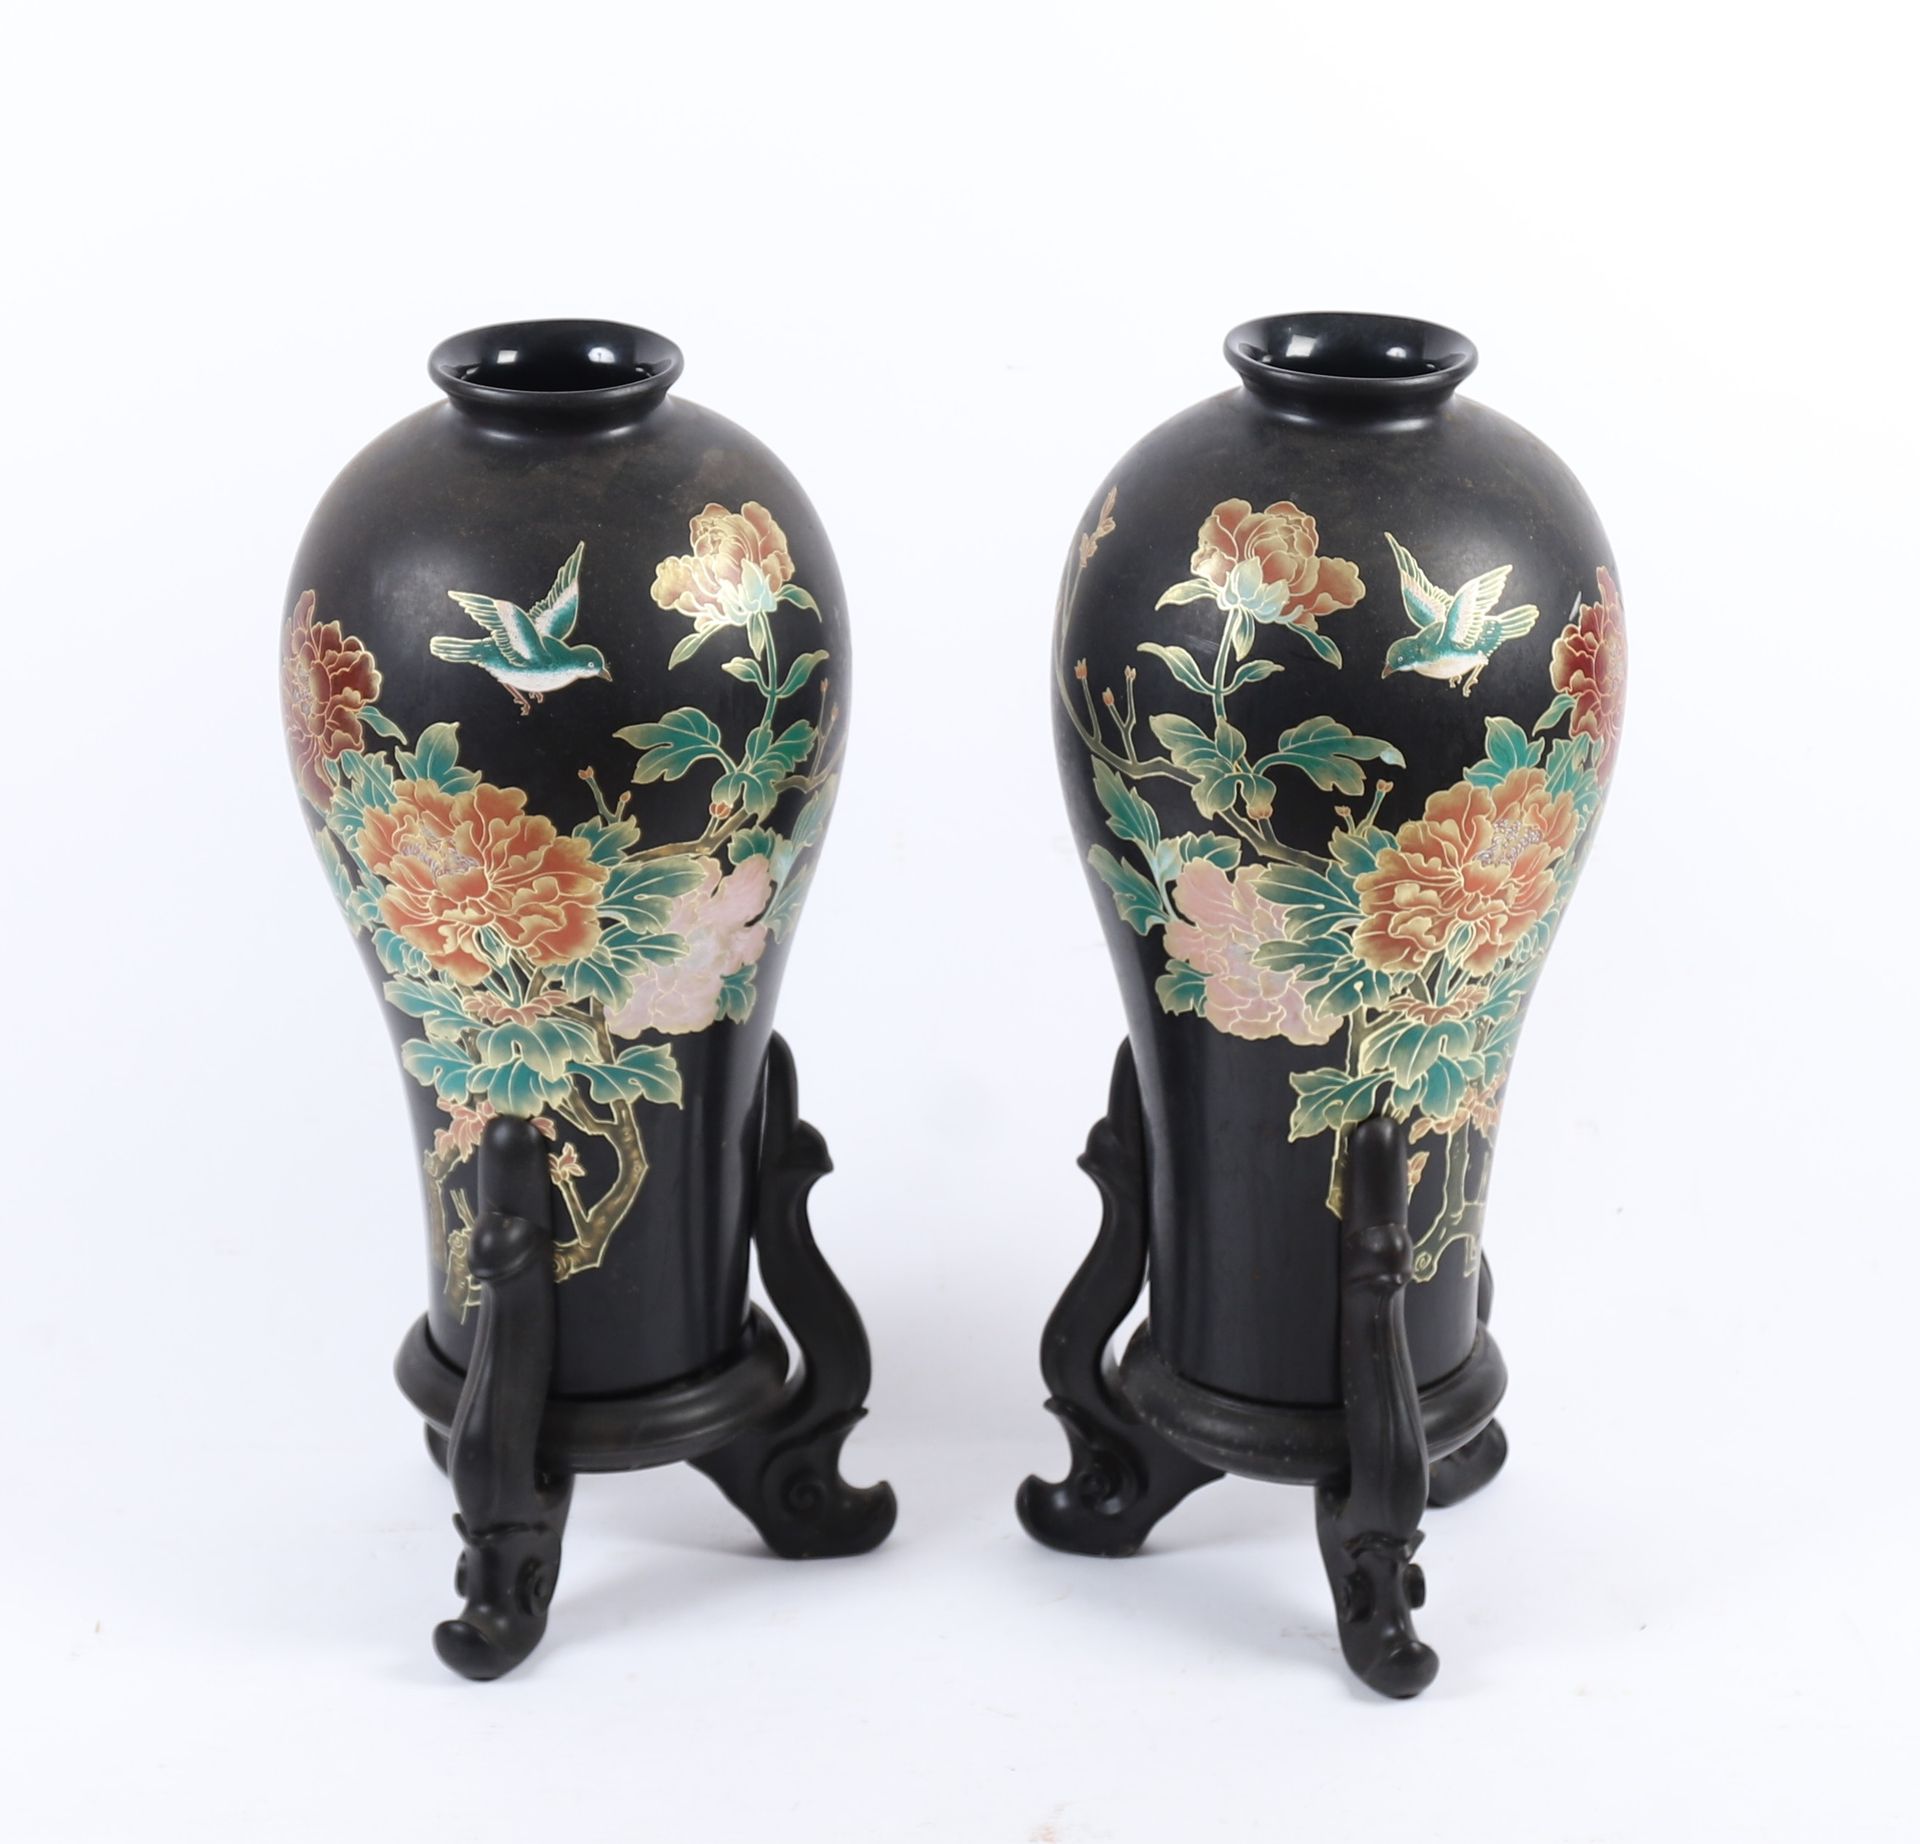 Null 一对亚洲漆木花瓶
多彩的鸟和花的装饰，并带有镀金的效果
搁置在一个三脚架底座上
20世纪
高：66,5厘米